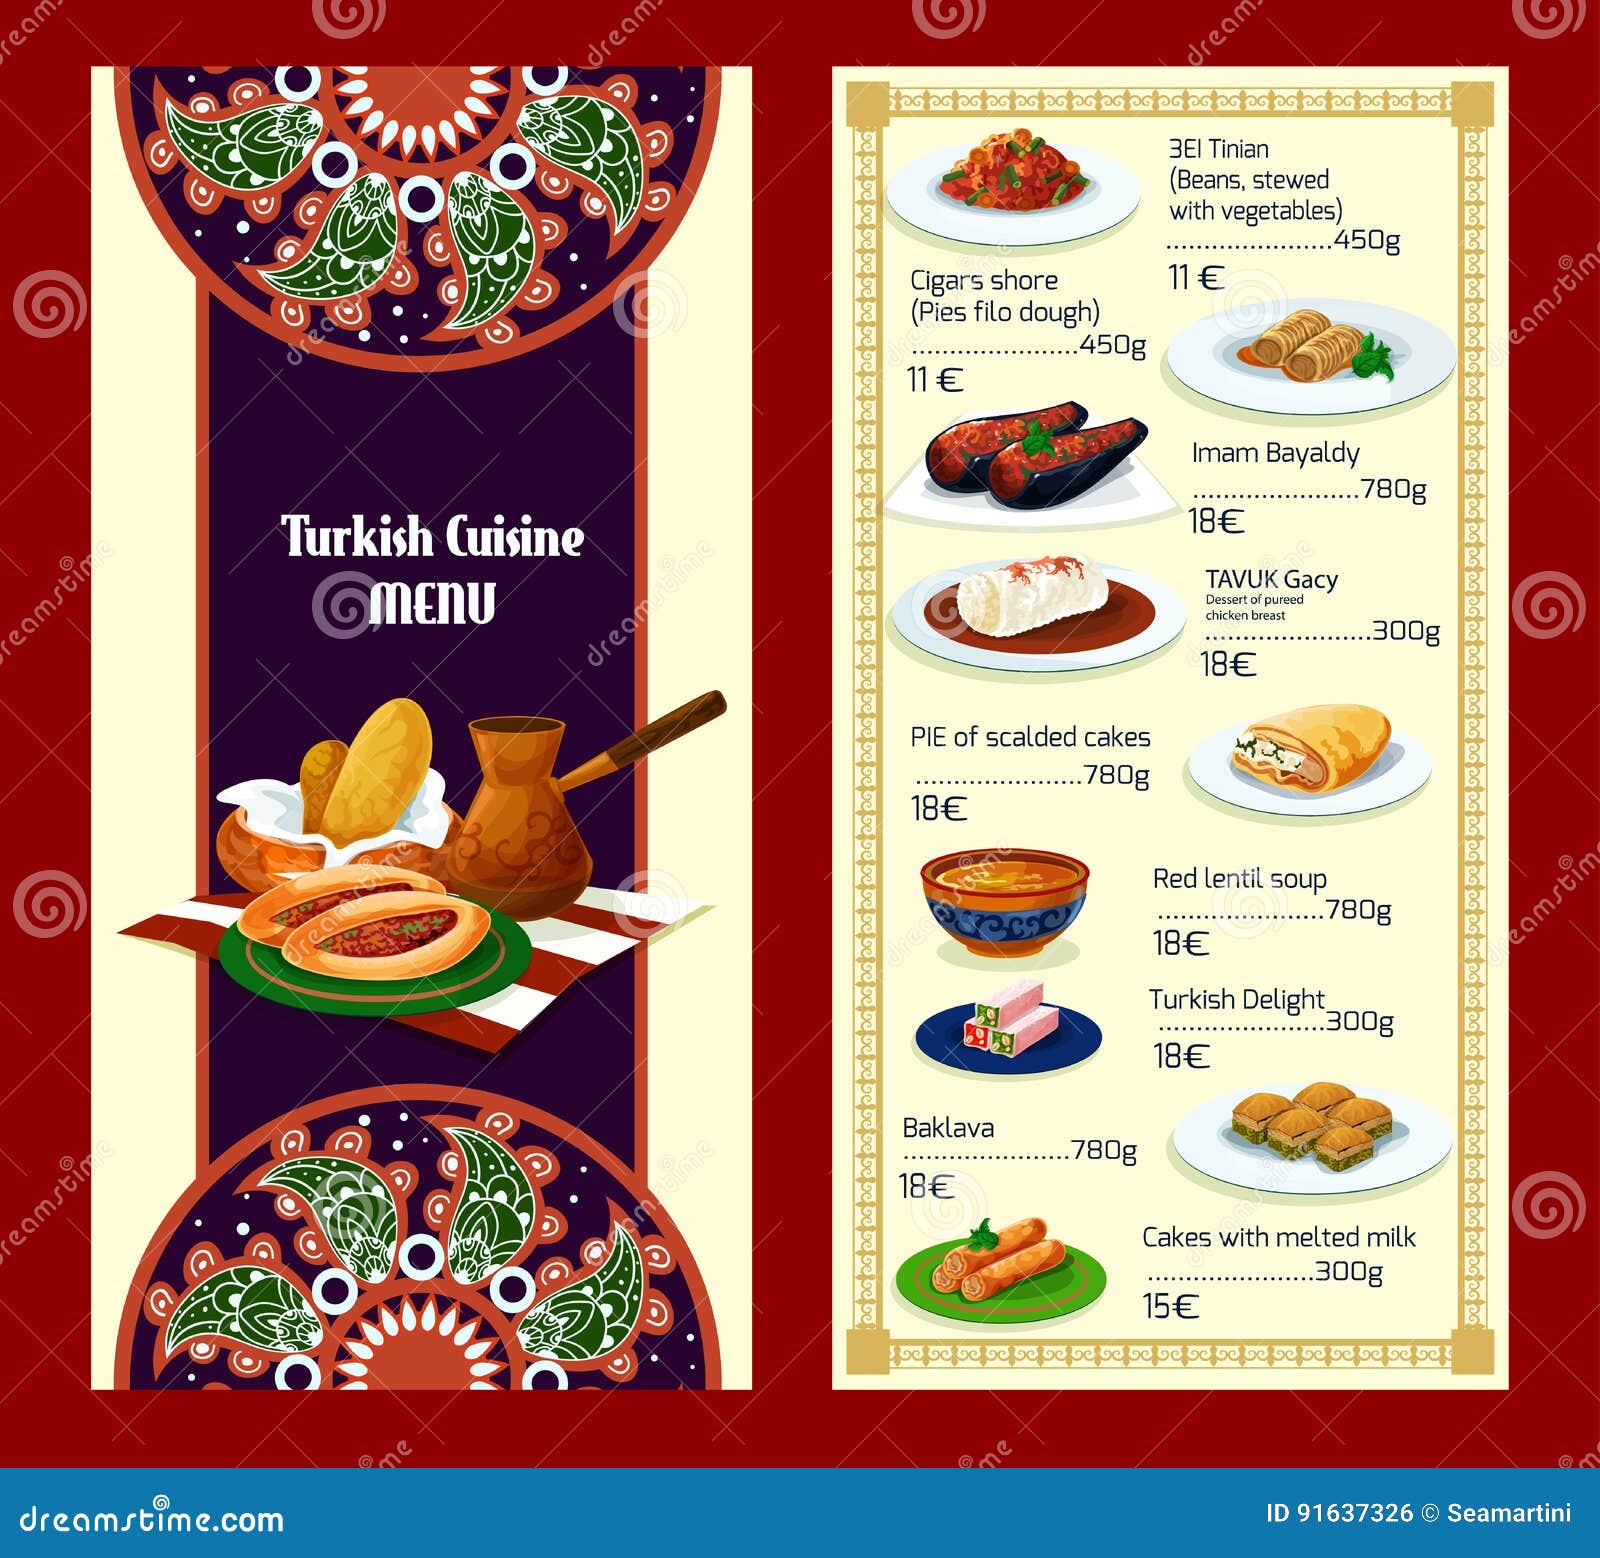 Турецкий ресторан меню. Турецкие блюда меню. Меню турецкой кухни. Меню турецкой кухни для ресторана. Меню ресторана в Турции.